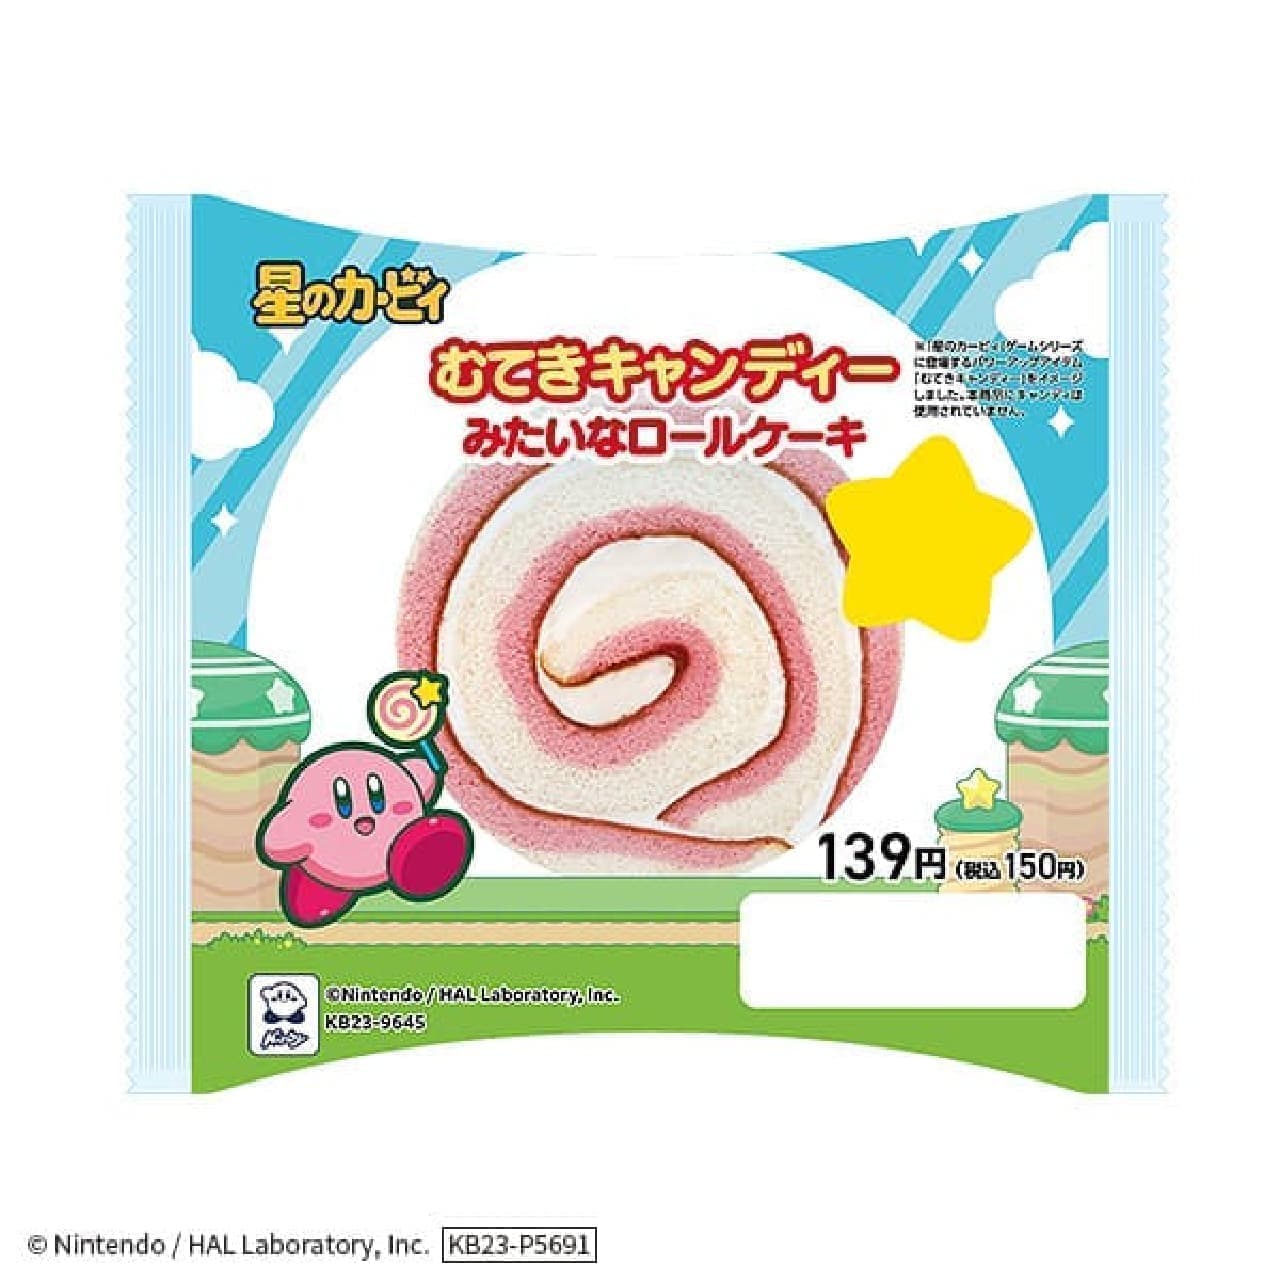 FamilyMart [Kirby collaboration target] Mutsuki Candy-like Roll Cake